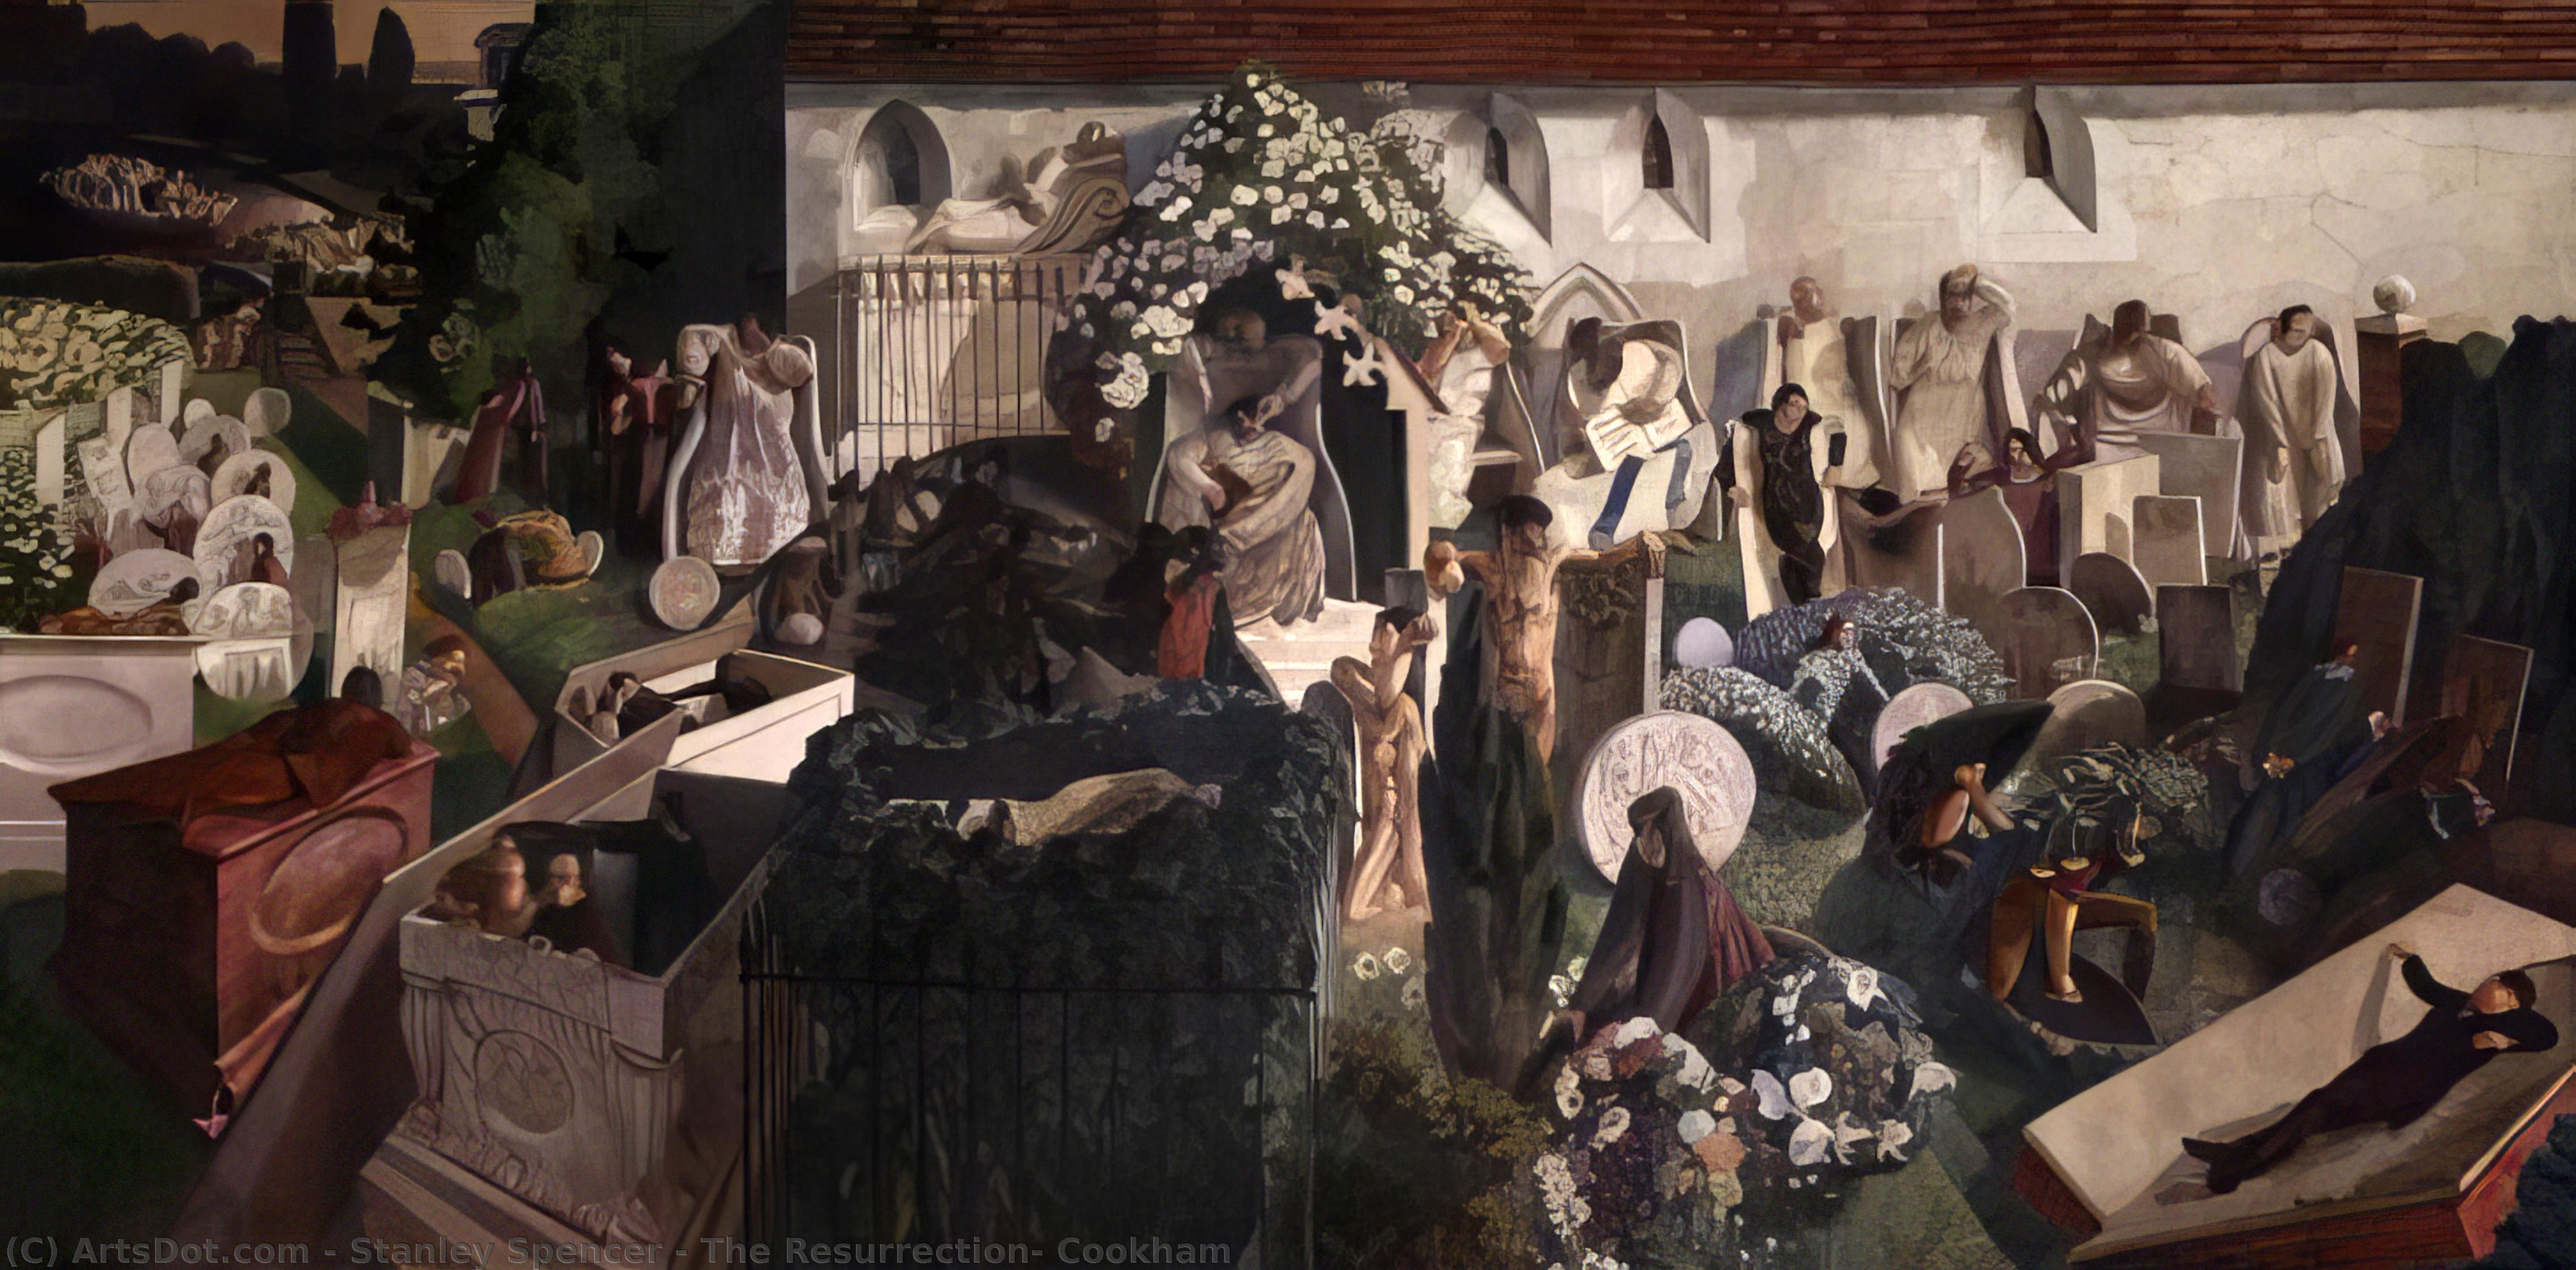 WikiOO.org - Encyclopedia of Fine Arts - Malba, Artwork Stanley Spencer - The Resurrection, Cookham